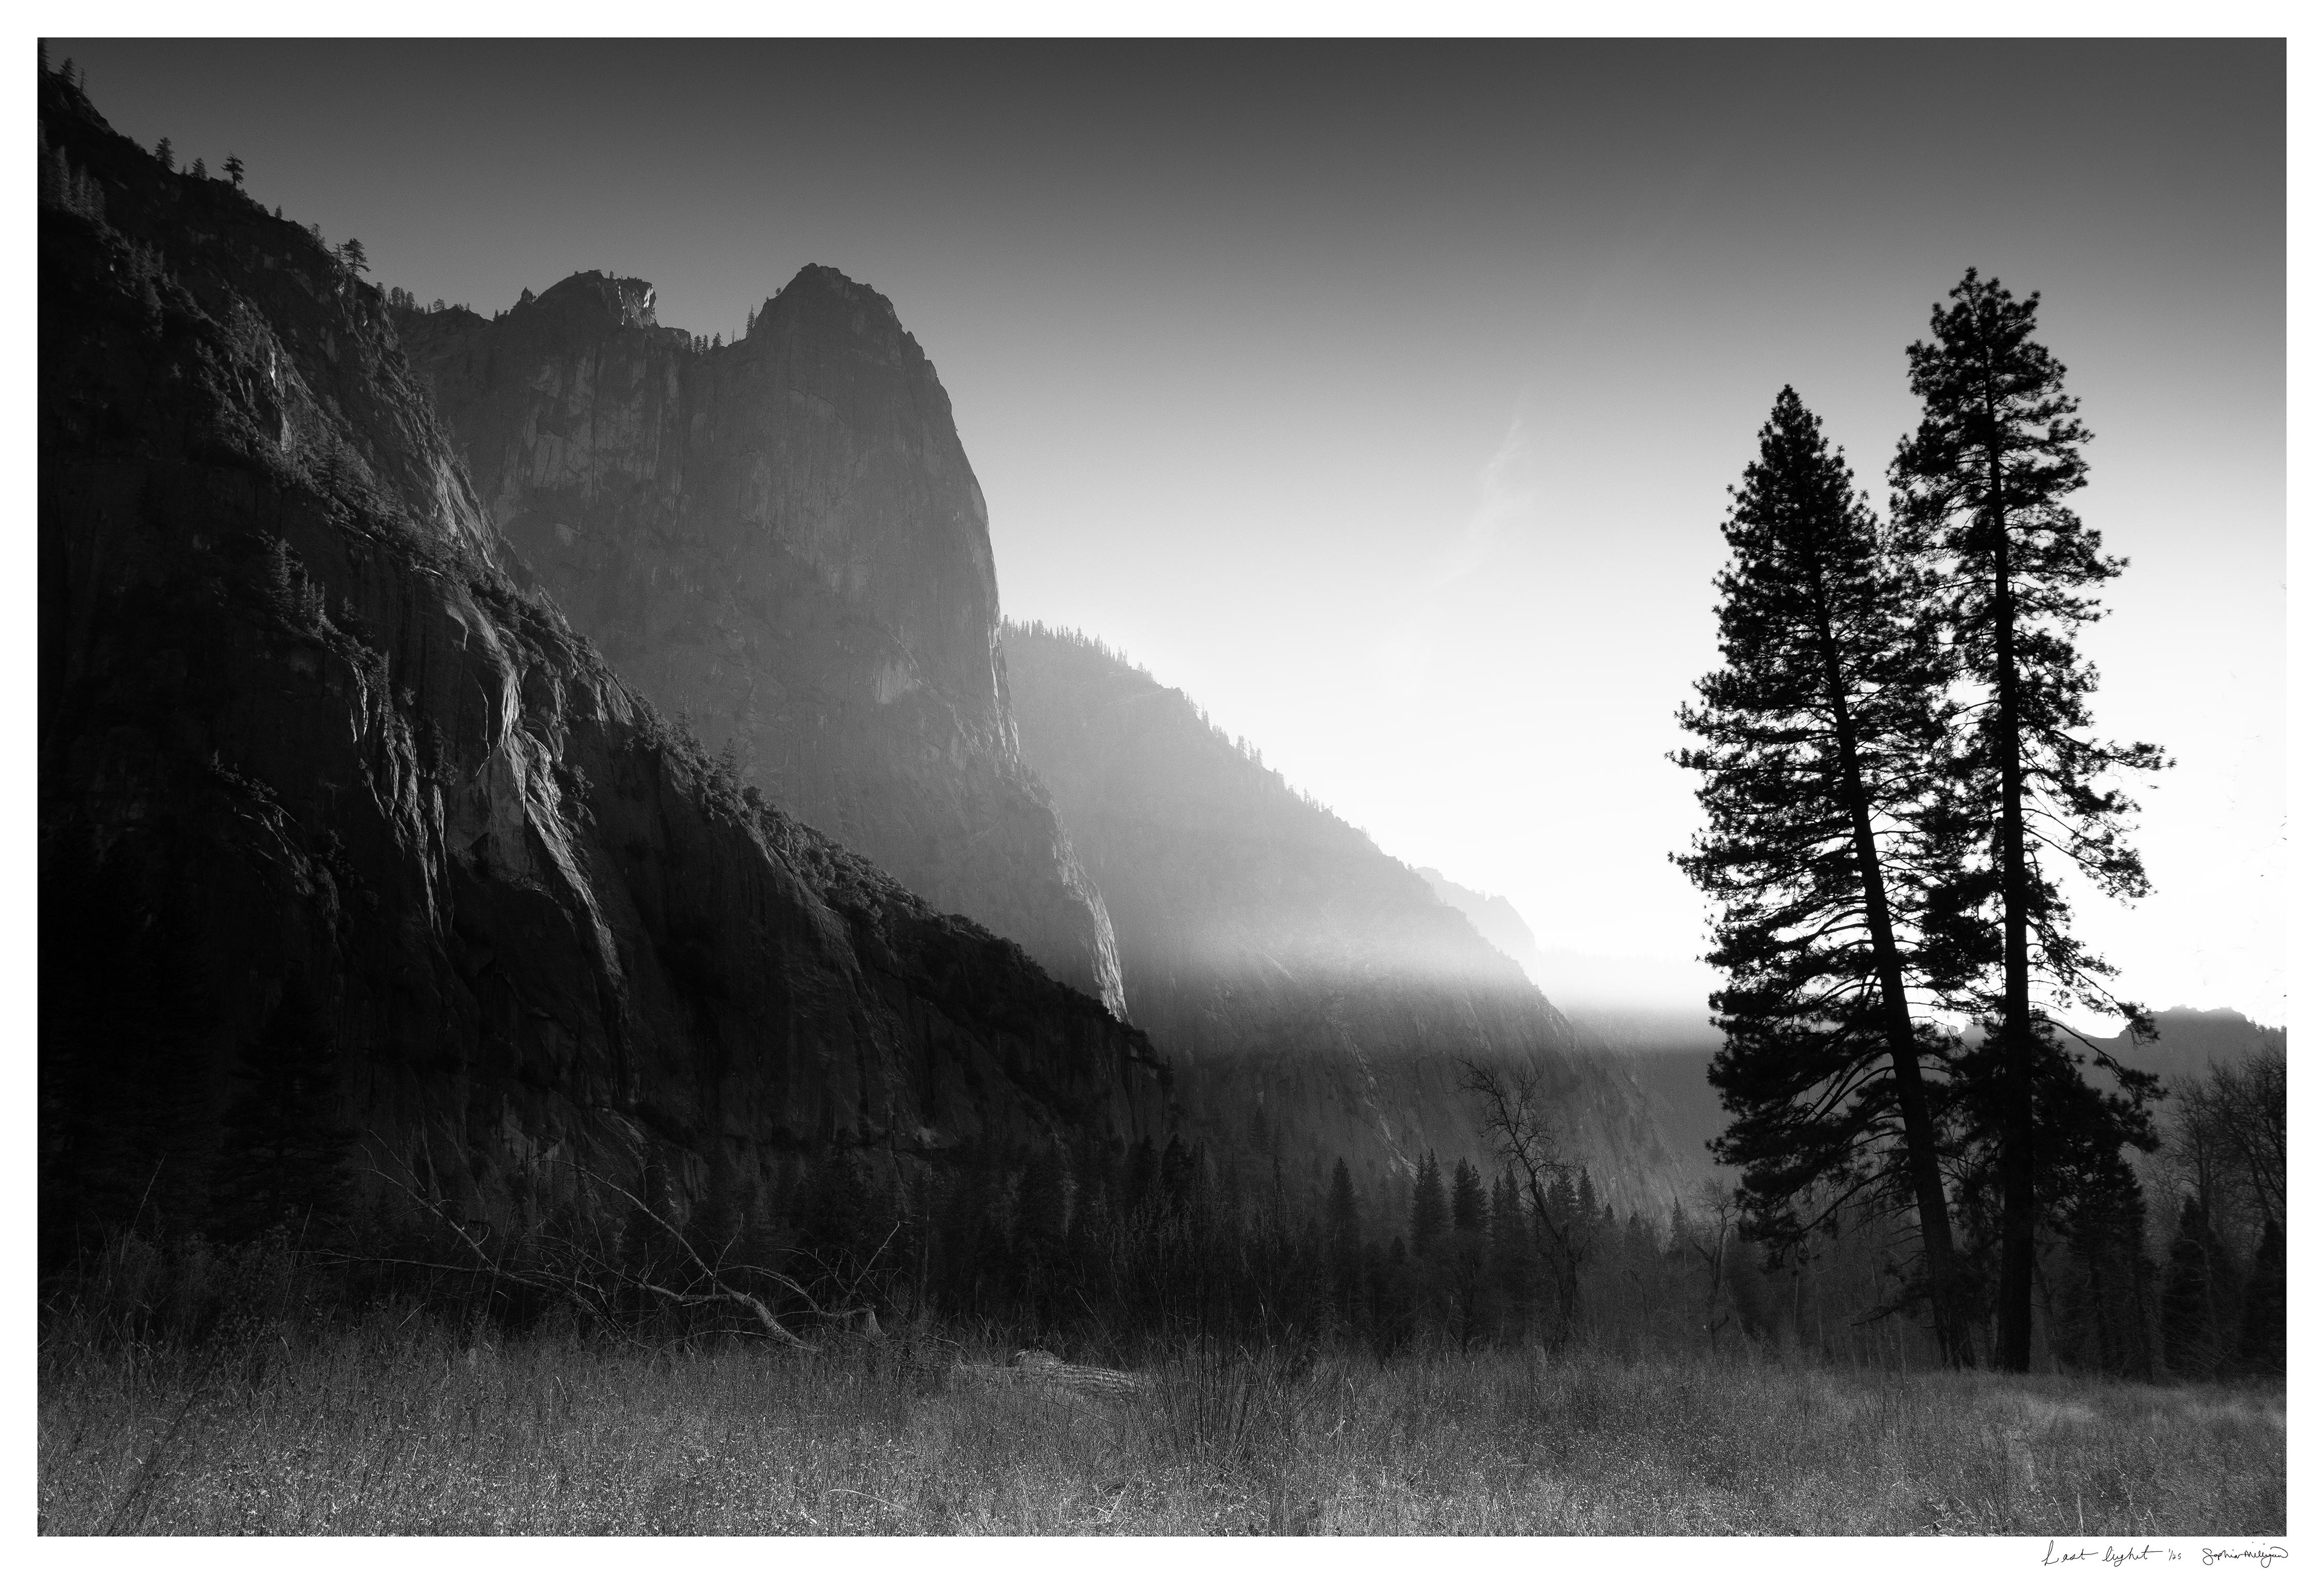 Sophia Milligan Landscape Photograph - 'Last Light' Limited edition photograph. Yosemite Mountains Trees Landscape